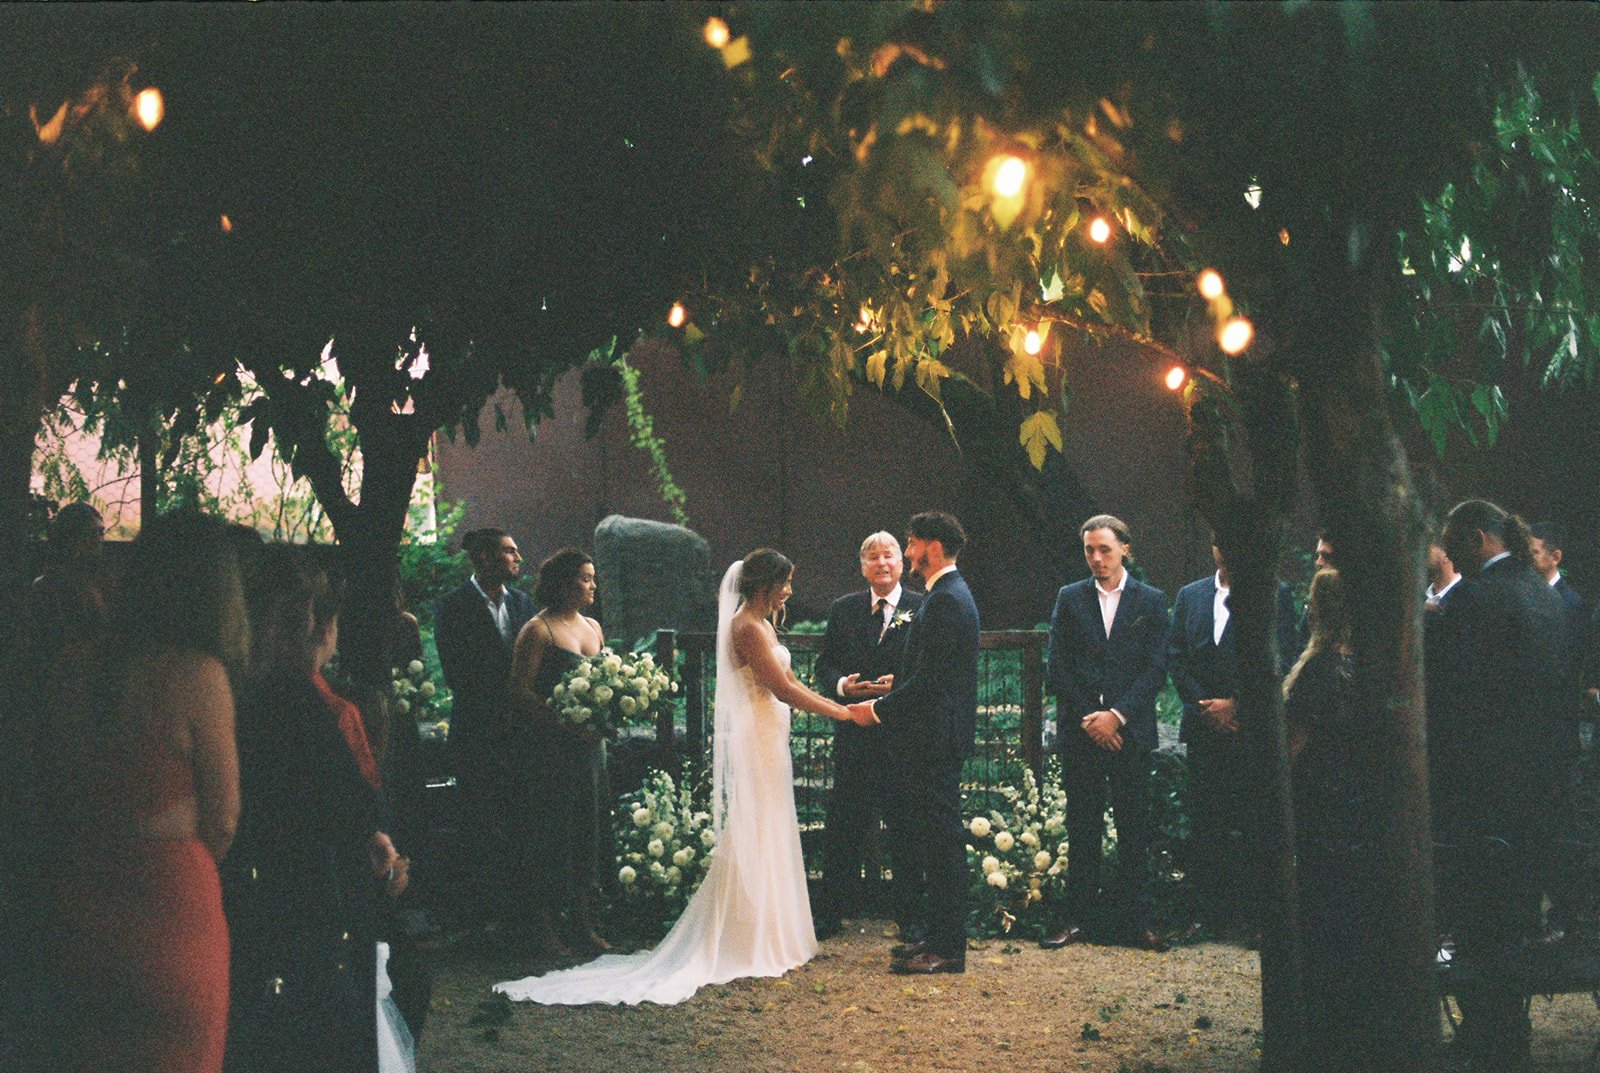 Film photos for a Rustic Fall wedding at Barndiva